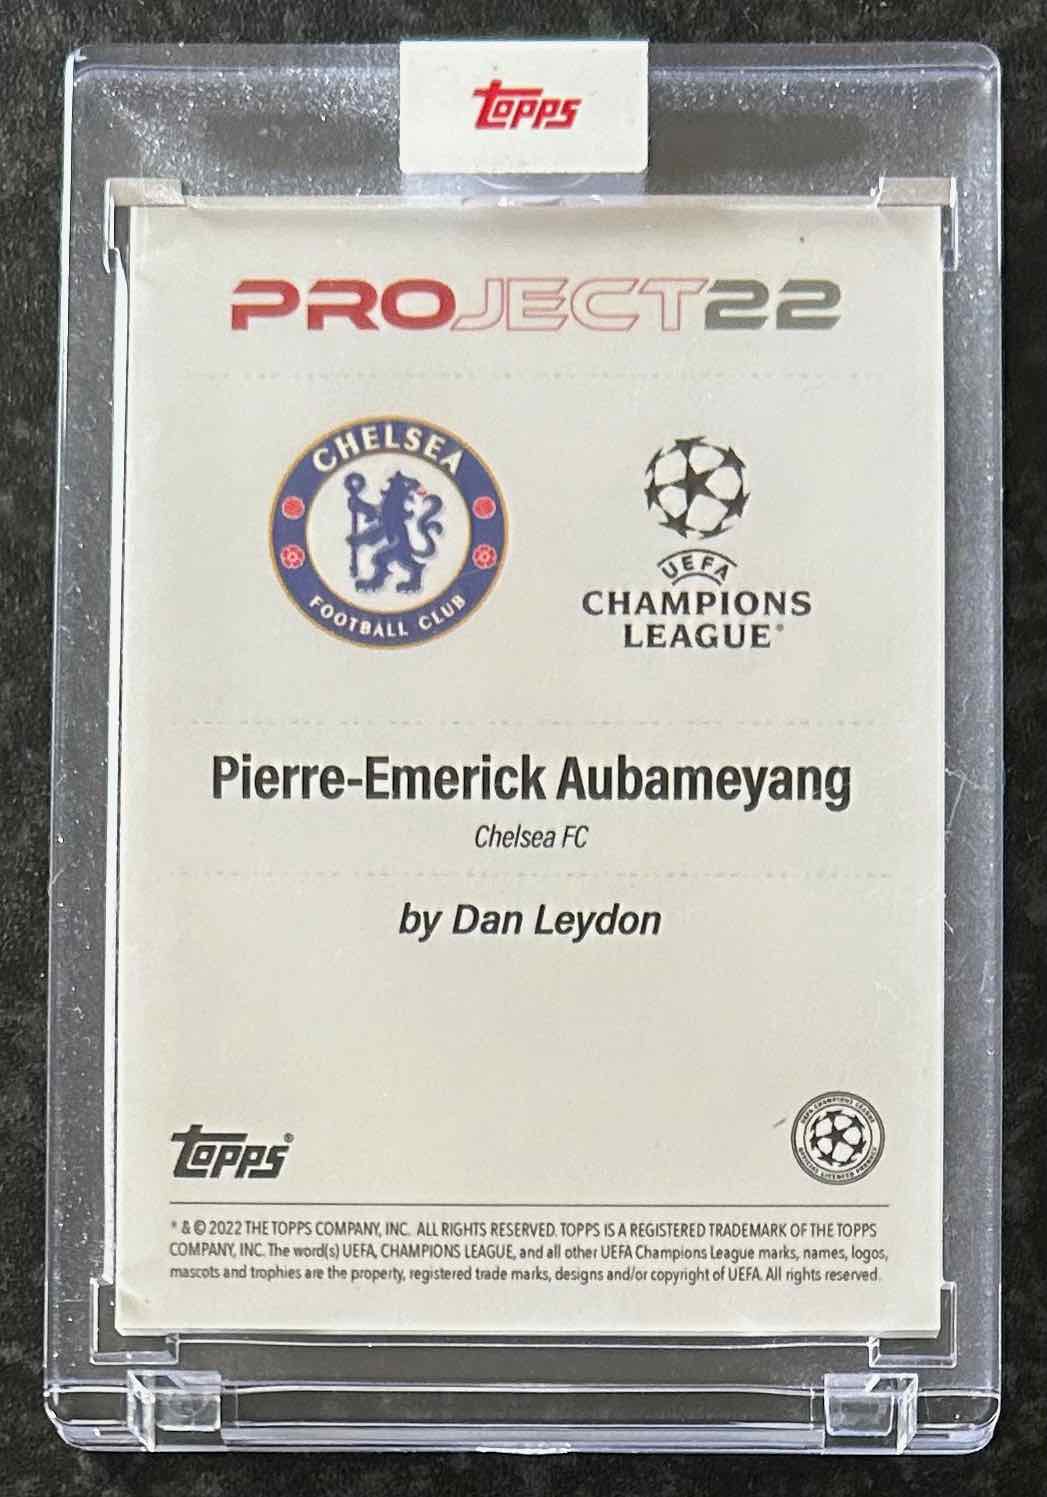 Pierre-Emerick Aubameyang (Chelsea FC) x Dan Leydon Topps Project 2022